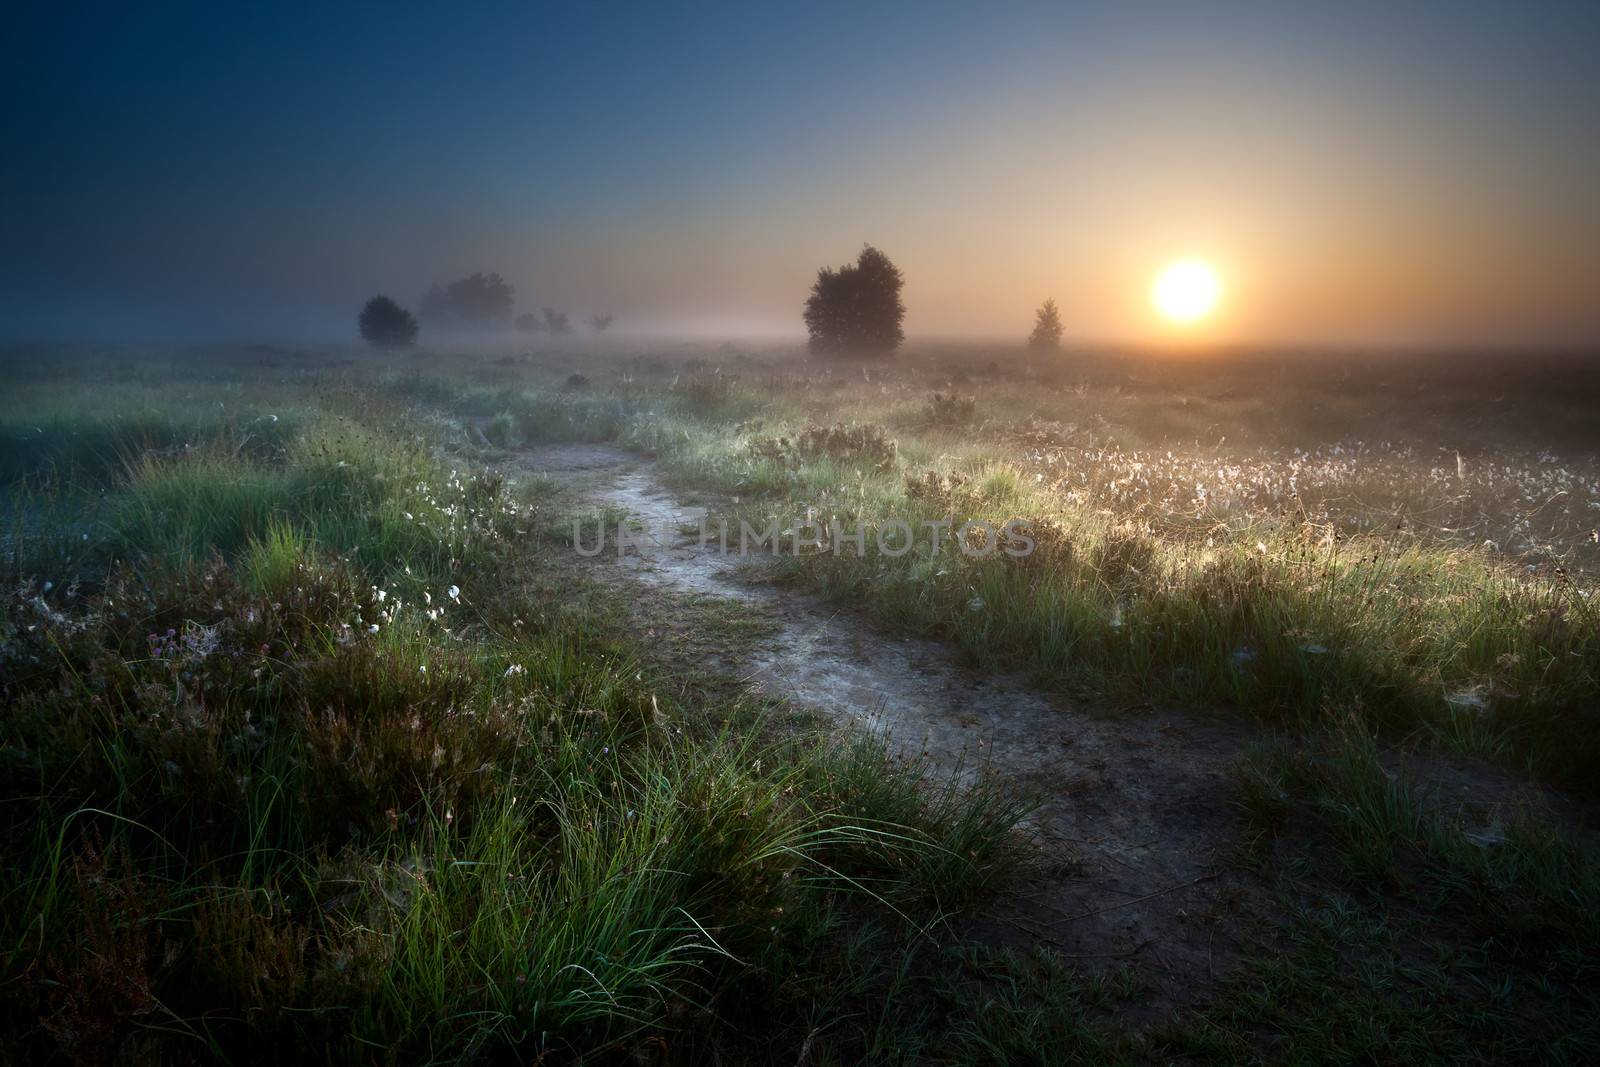 misty sunrise over countryside path through swamps, Fochteloerveen, Drenthe, Netherlands